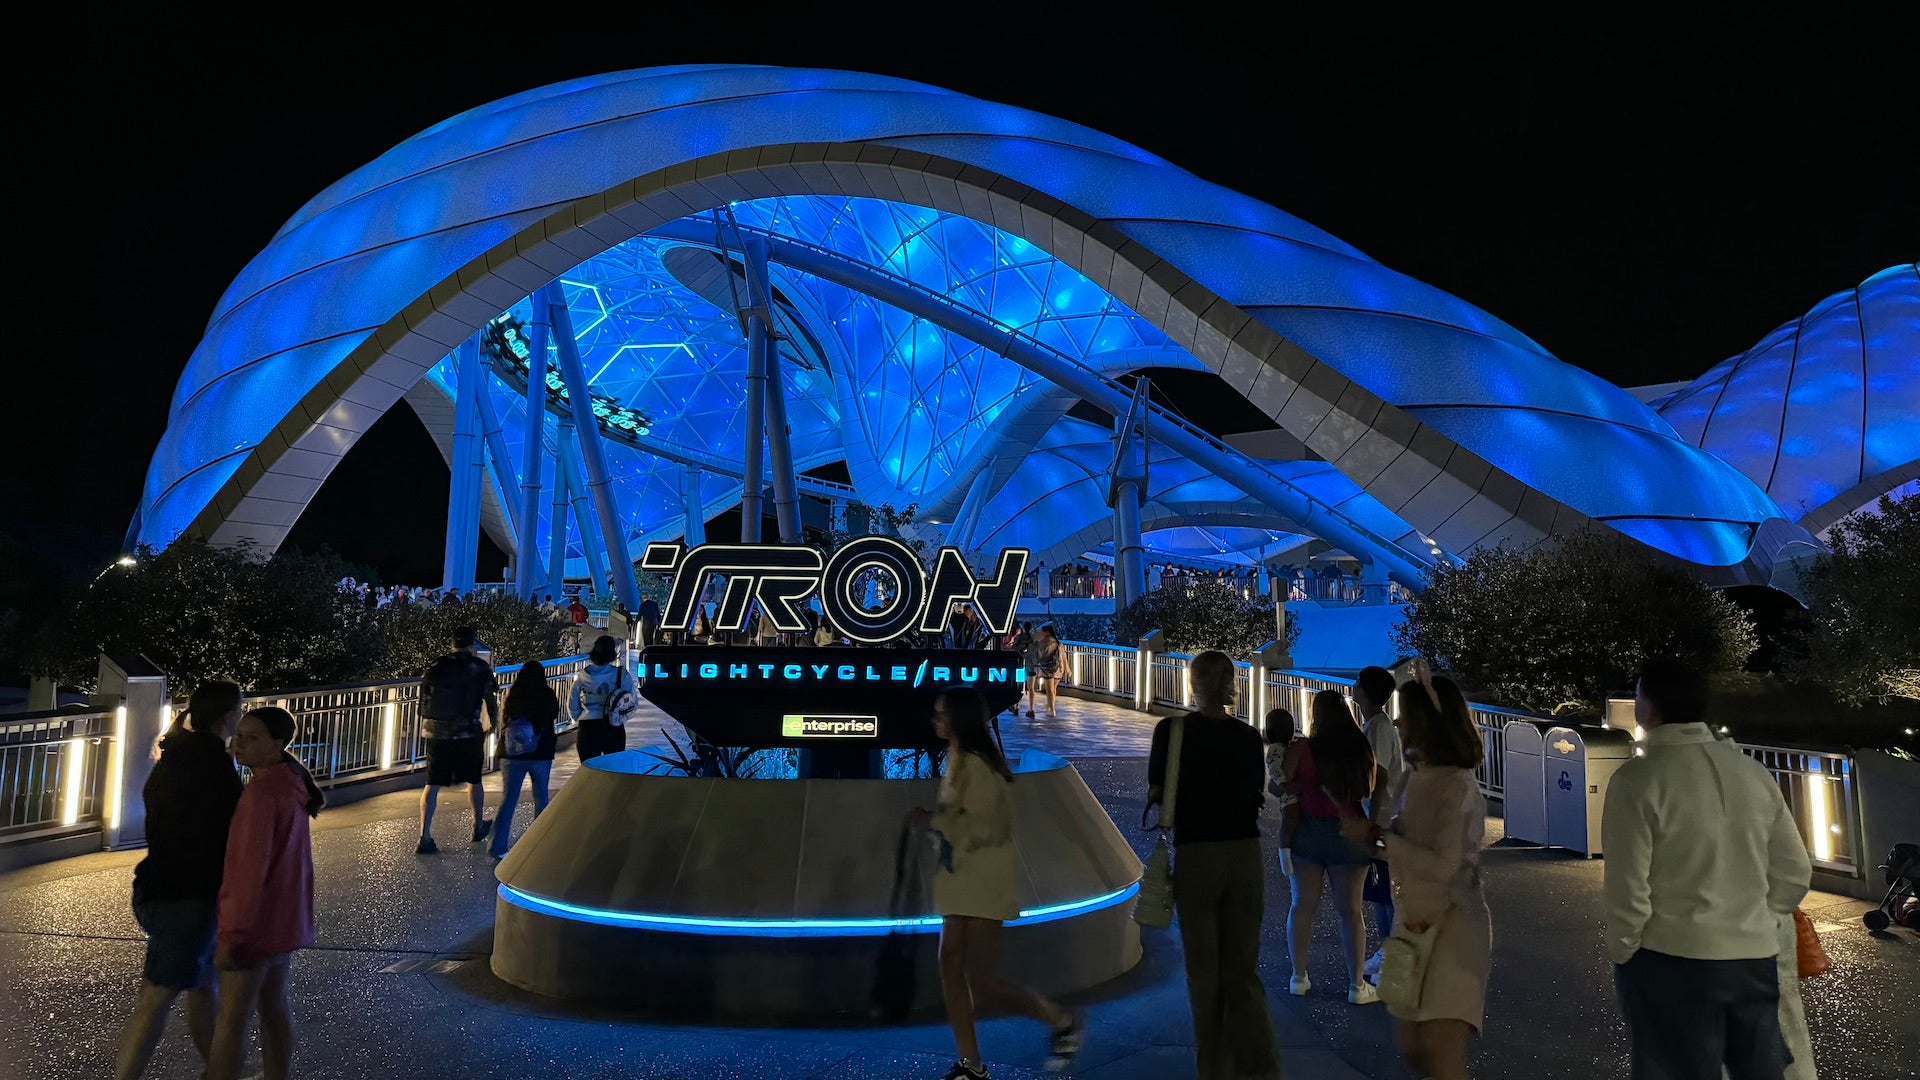 Entrance to Tron at Disney World in Orlando Florida at night